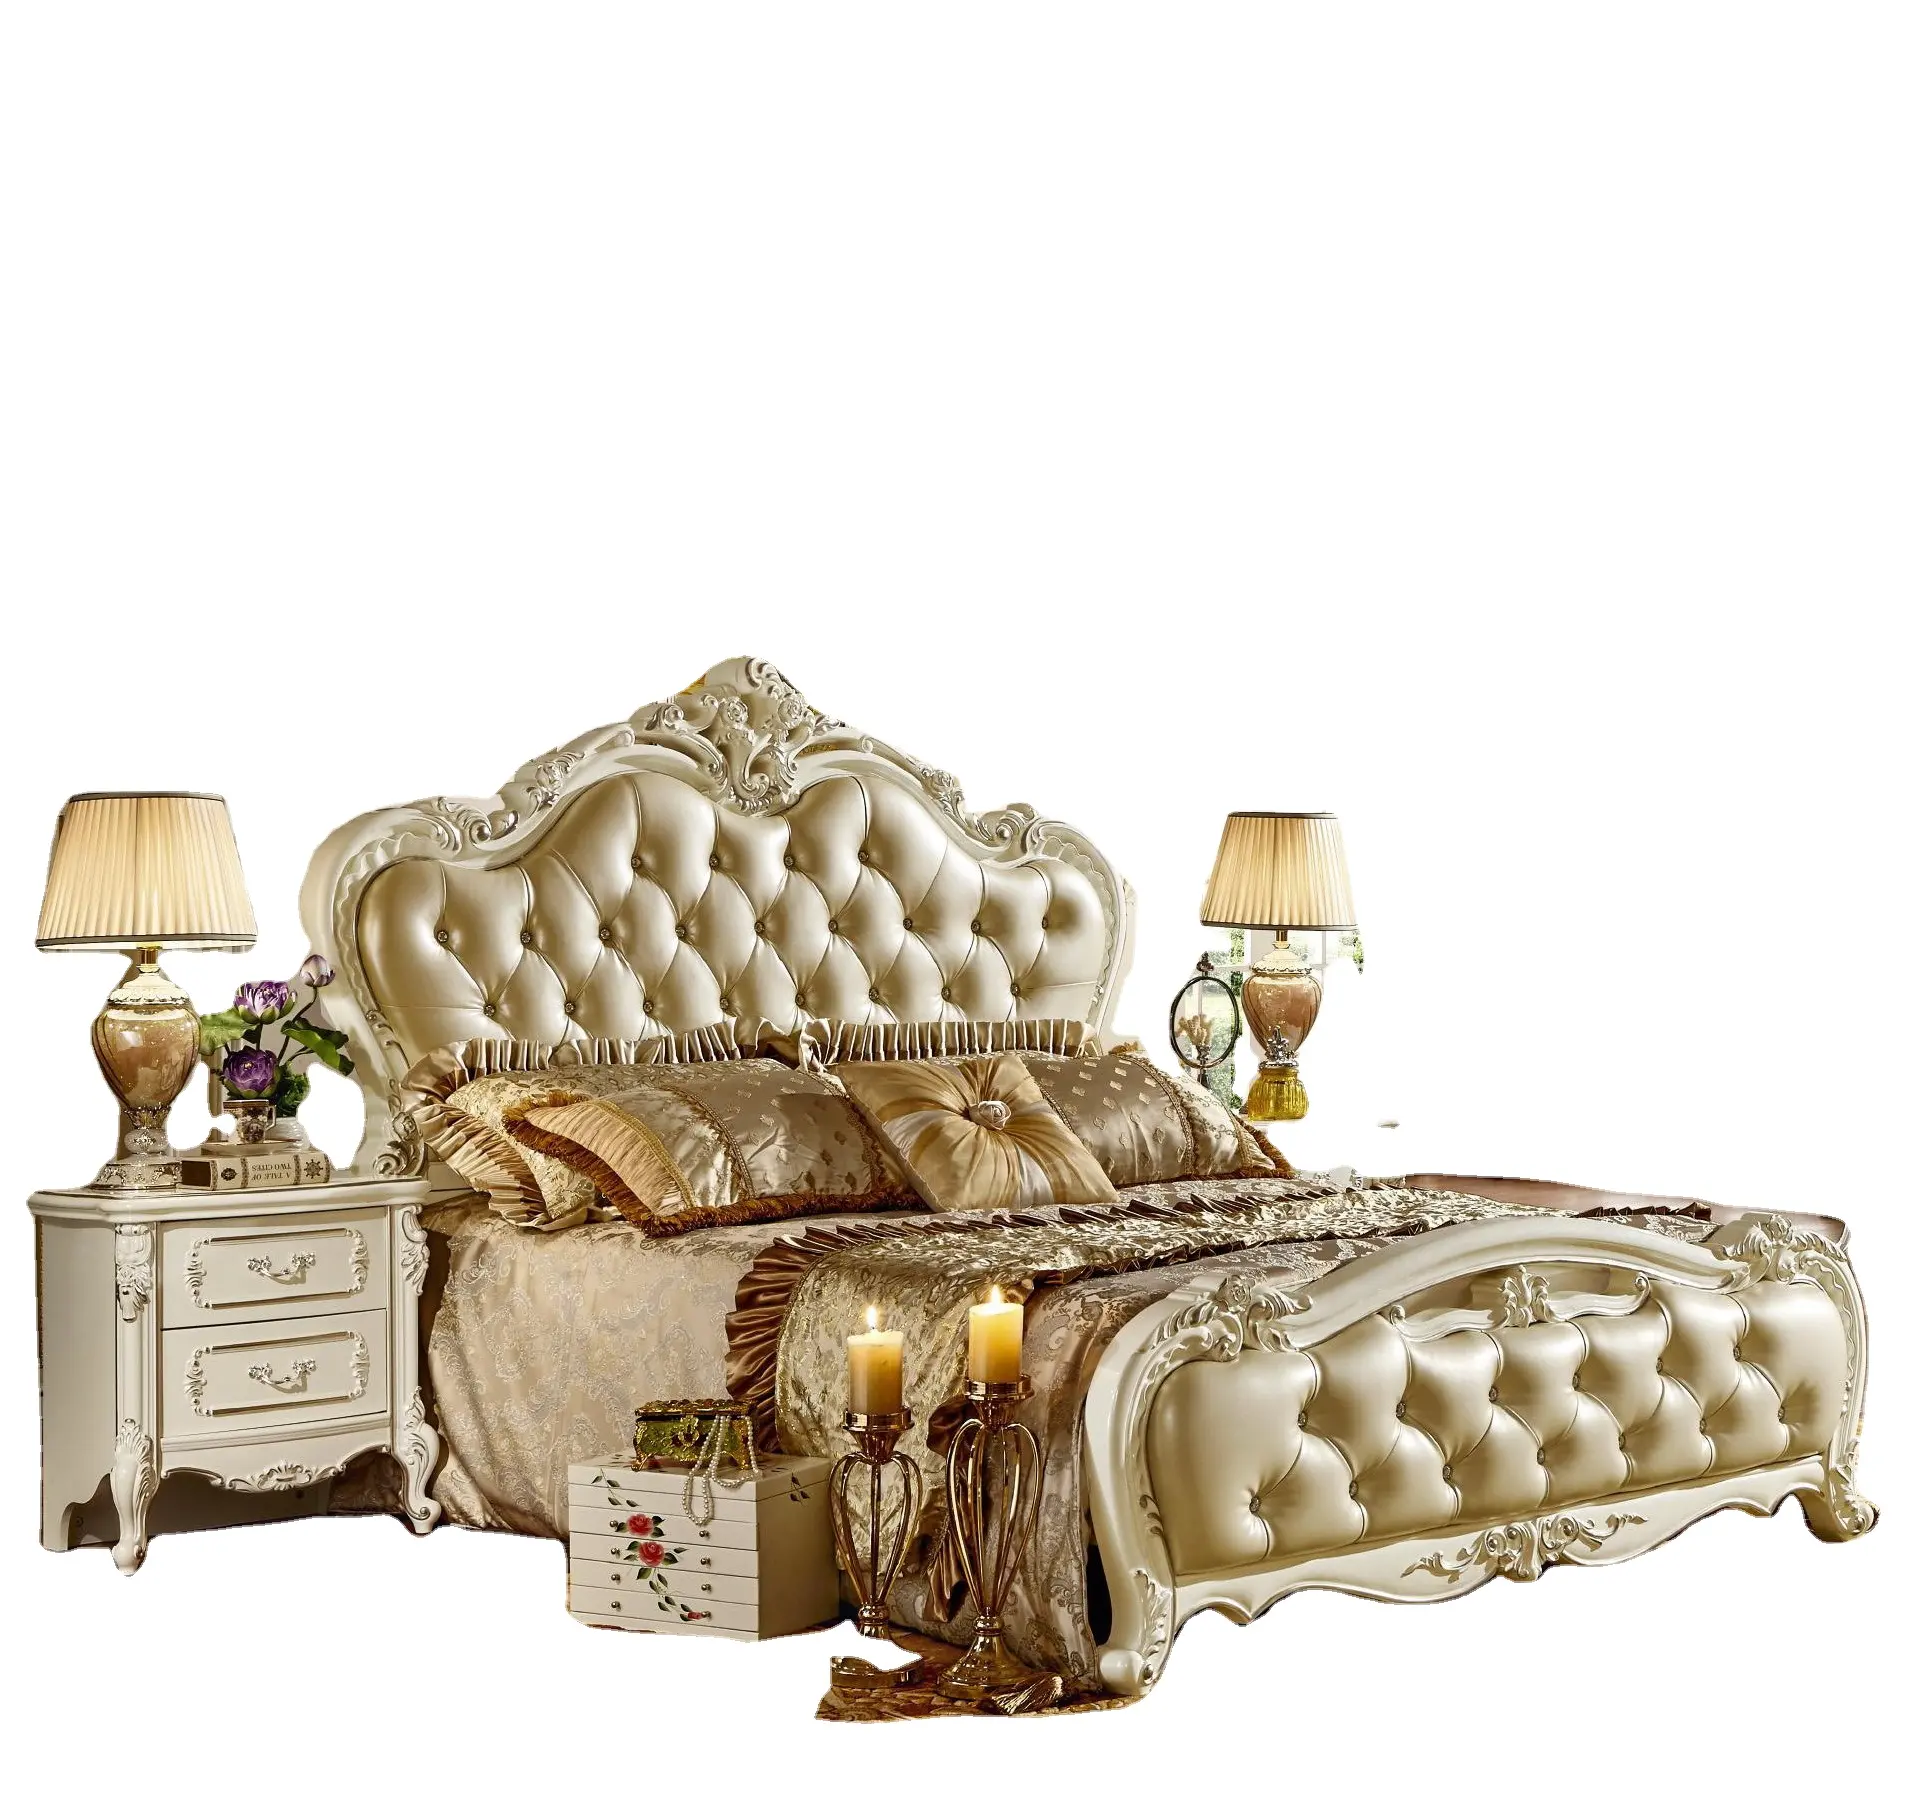 La reina de muebles de dormitorio conjuntos de muebles de dormitorio de madera habitaciones Italia <span class=keywords><strong>moderna</strong></span> muebles